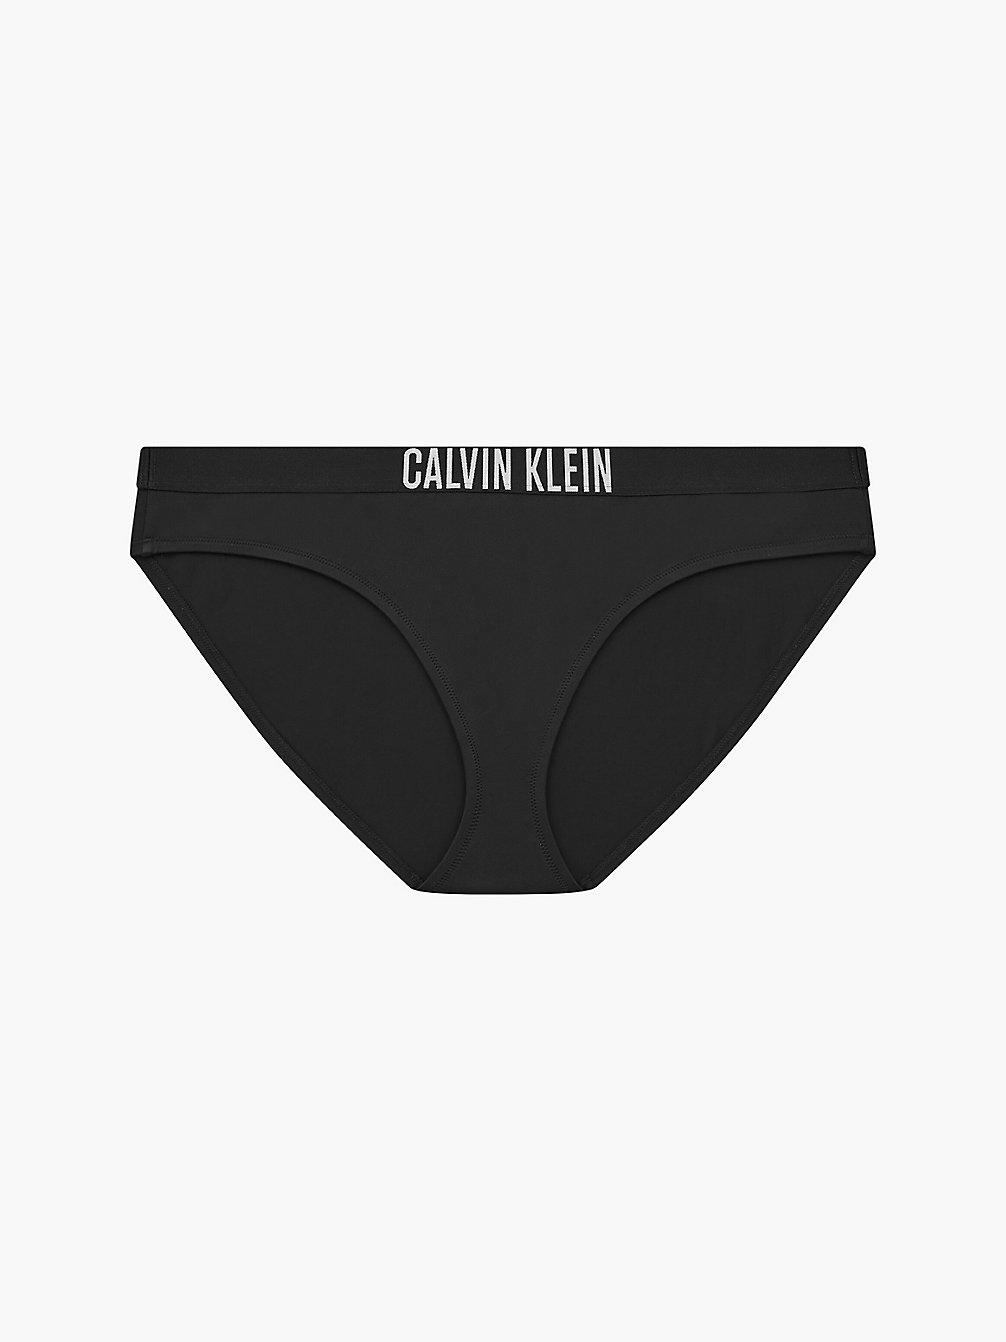 PVH BLACK Plus Size Bikini Bottom - Intense Power undefined women Calvin Klein